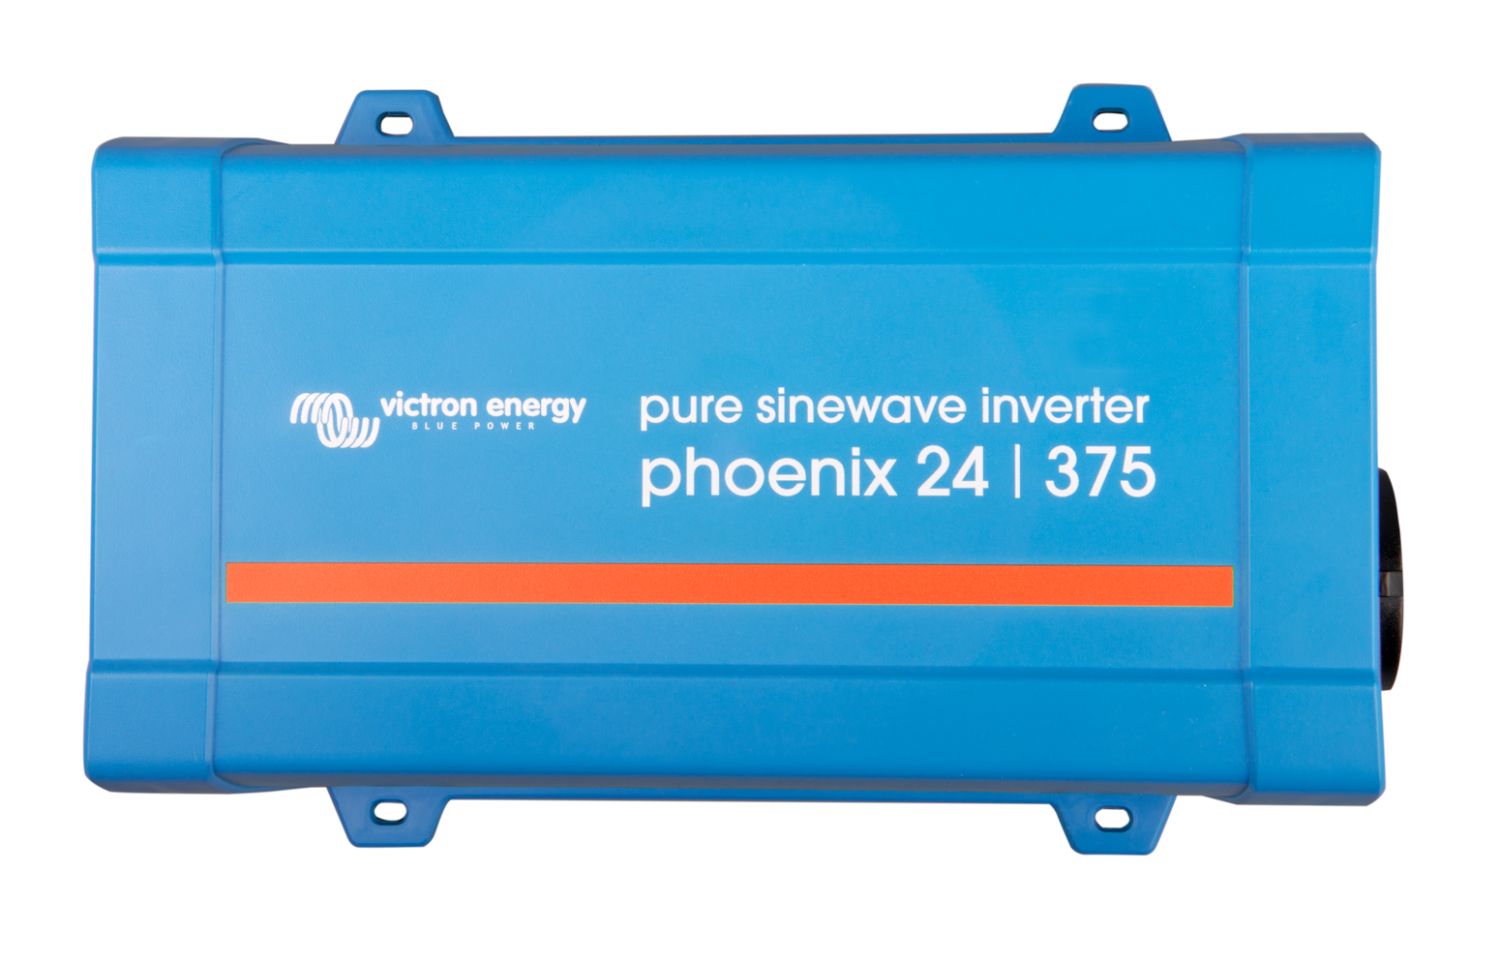 Phoenix Inverter 48/250 230V VE.Direct IEC